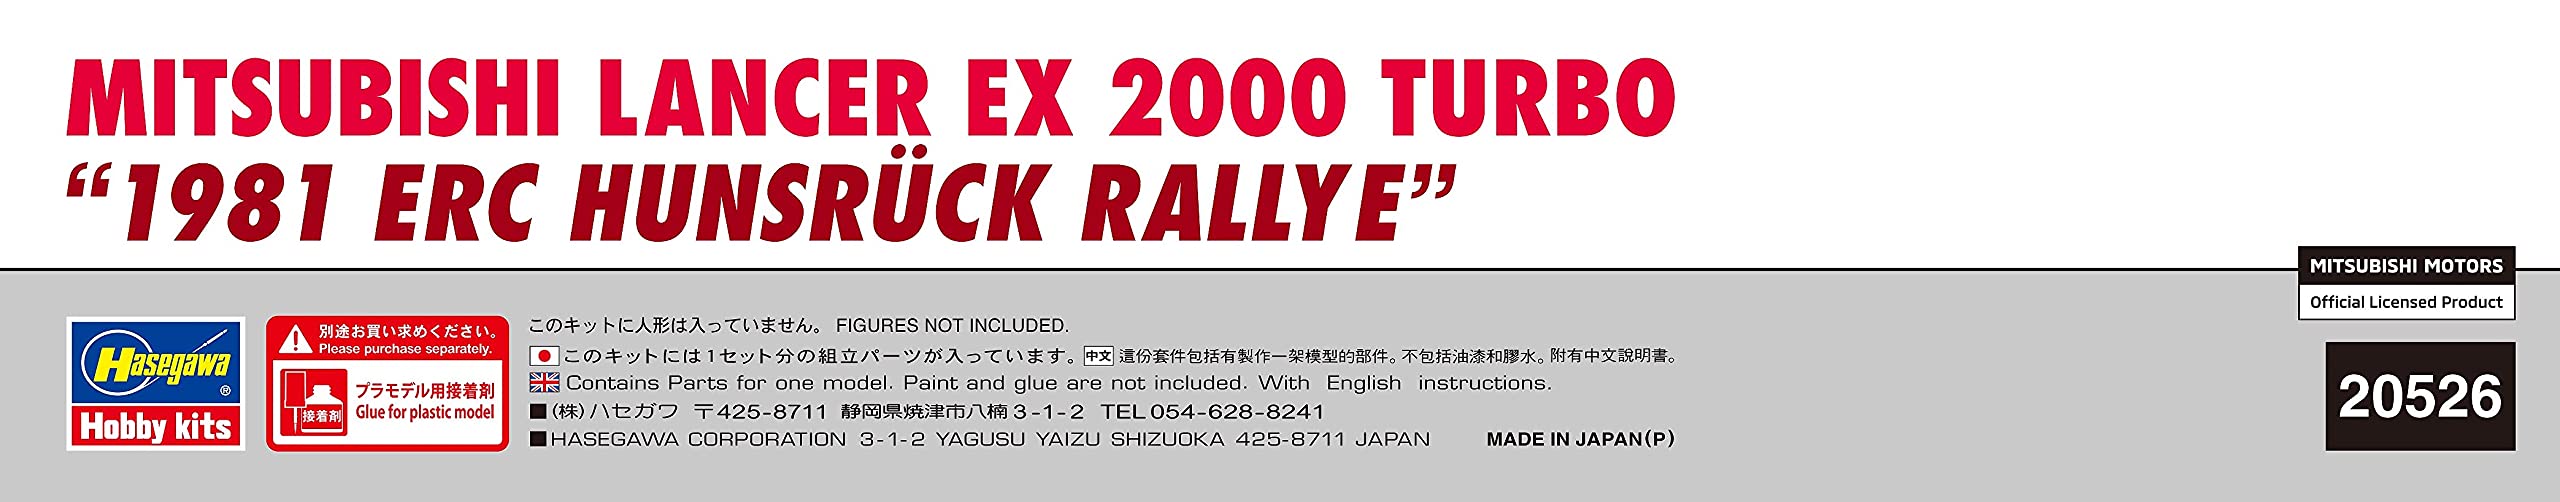 Hasegawa 1/24 Mitsubishi Lancer Ex 2000 Turbo 1981 Erc Hunsruck Rallye Scale Car Kit